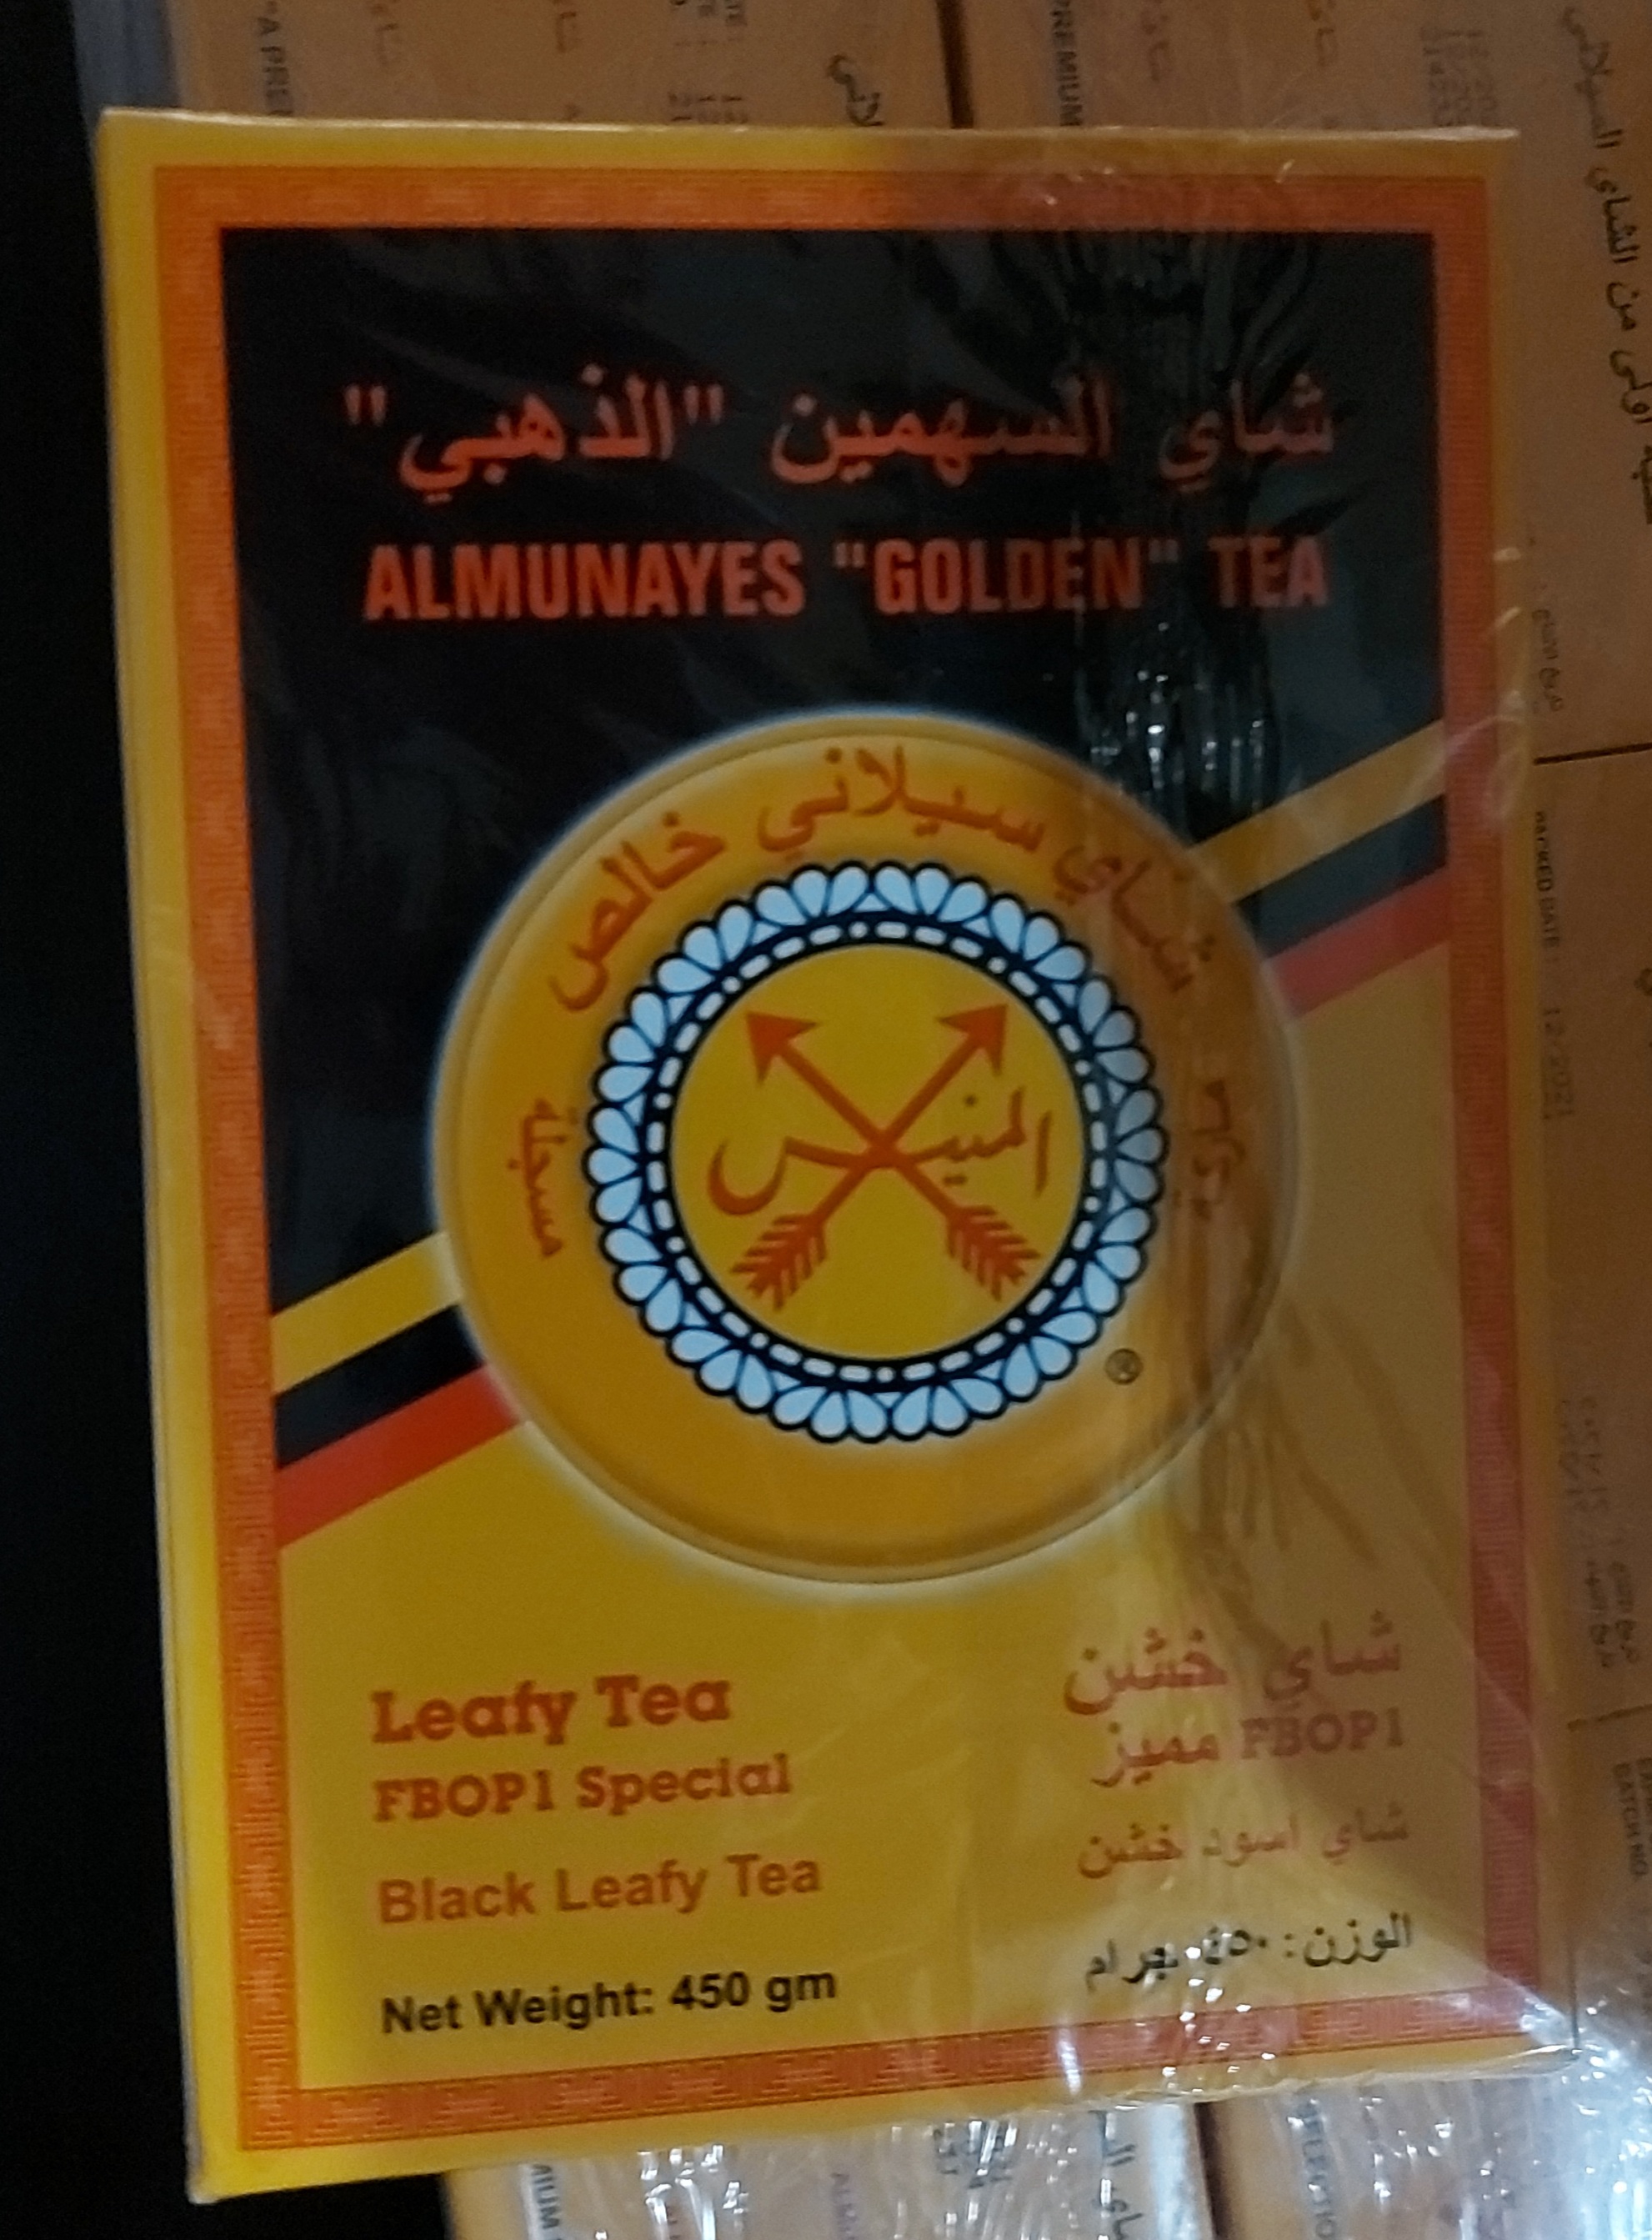  چای سیاه المنیس طلایی450gr almunayes